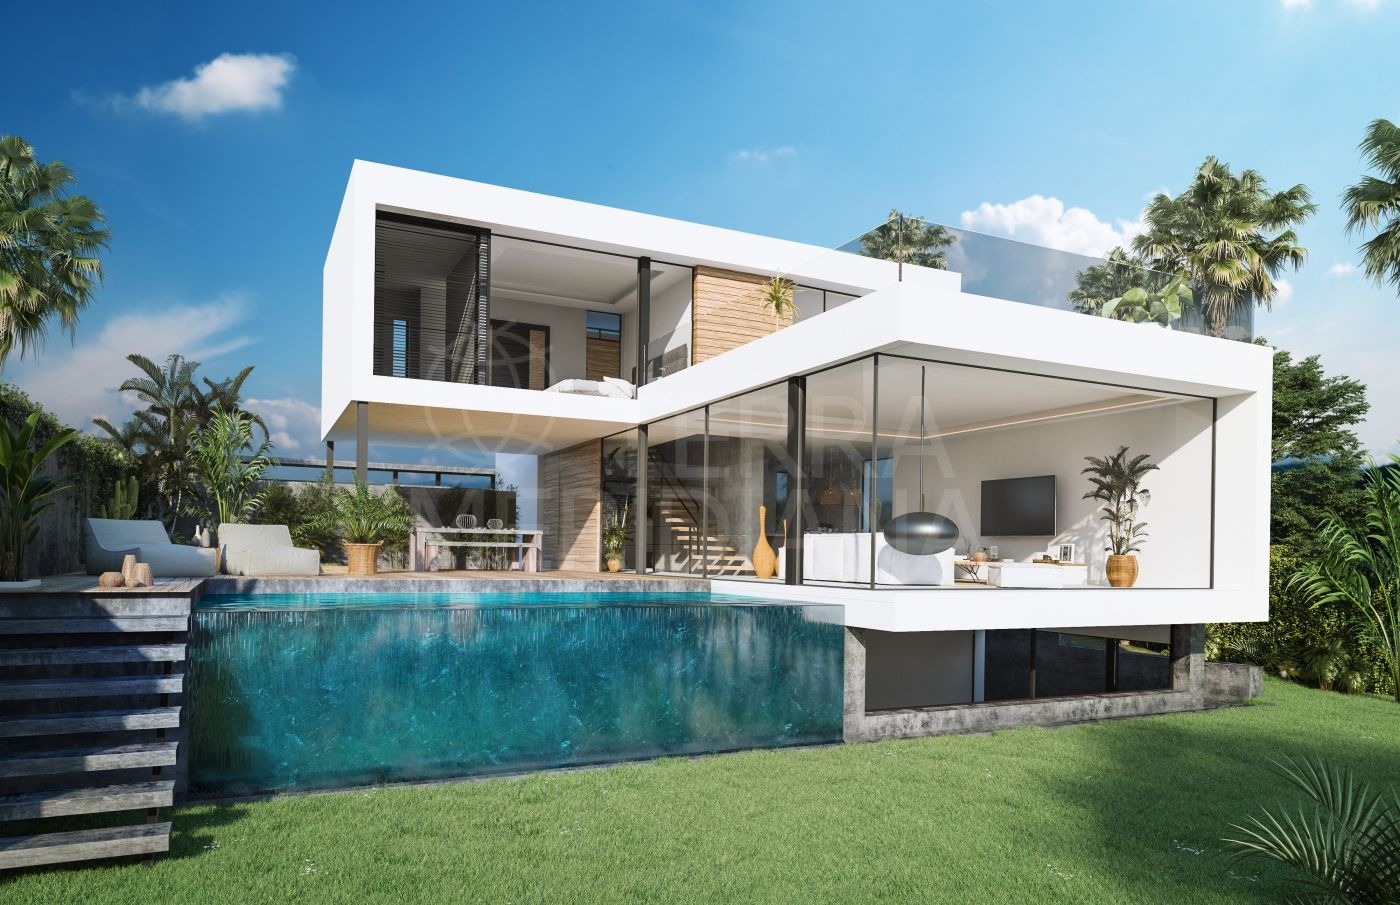 Luxurious new 4 bedroom villas for sale in El Campanario, Estepona with private swimming pool